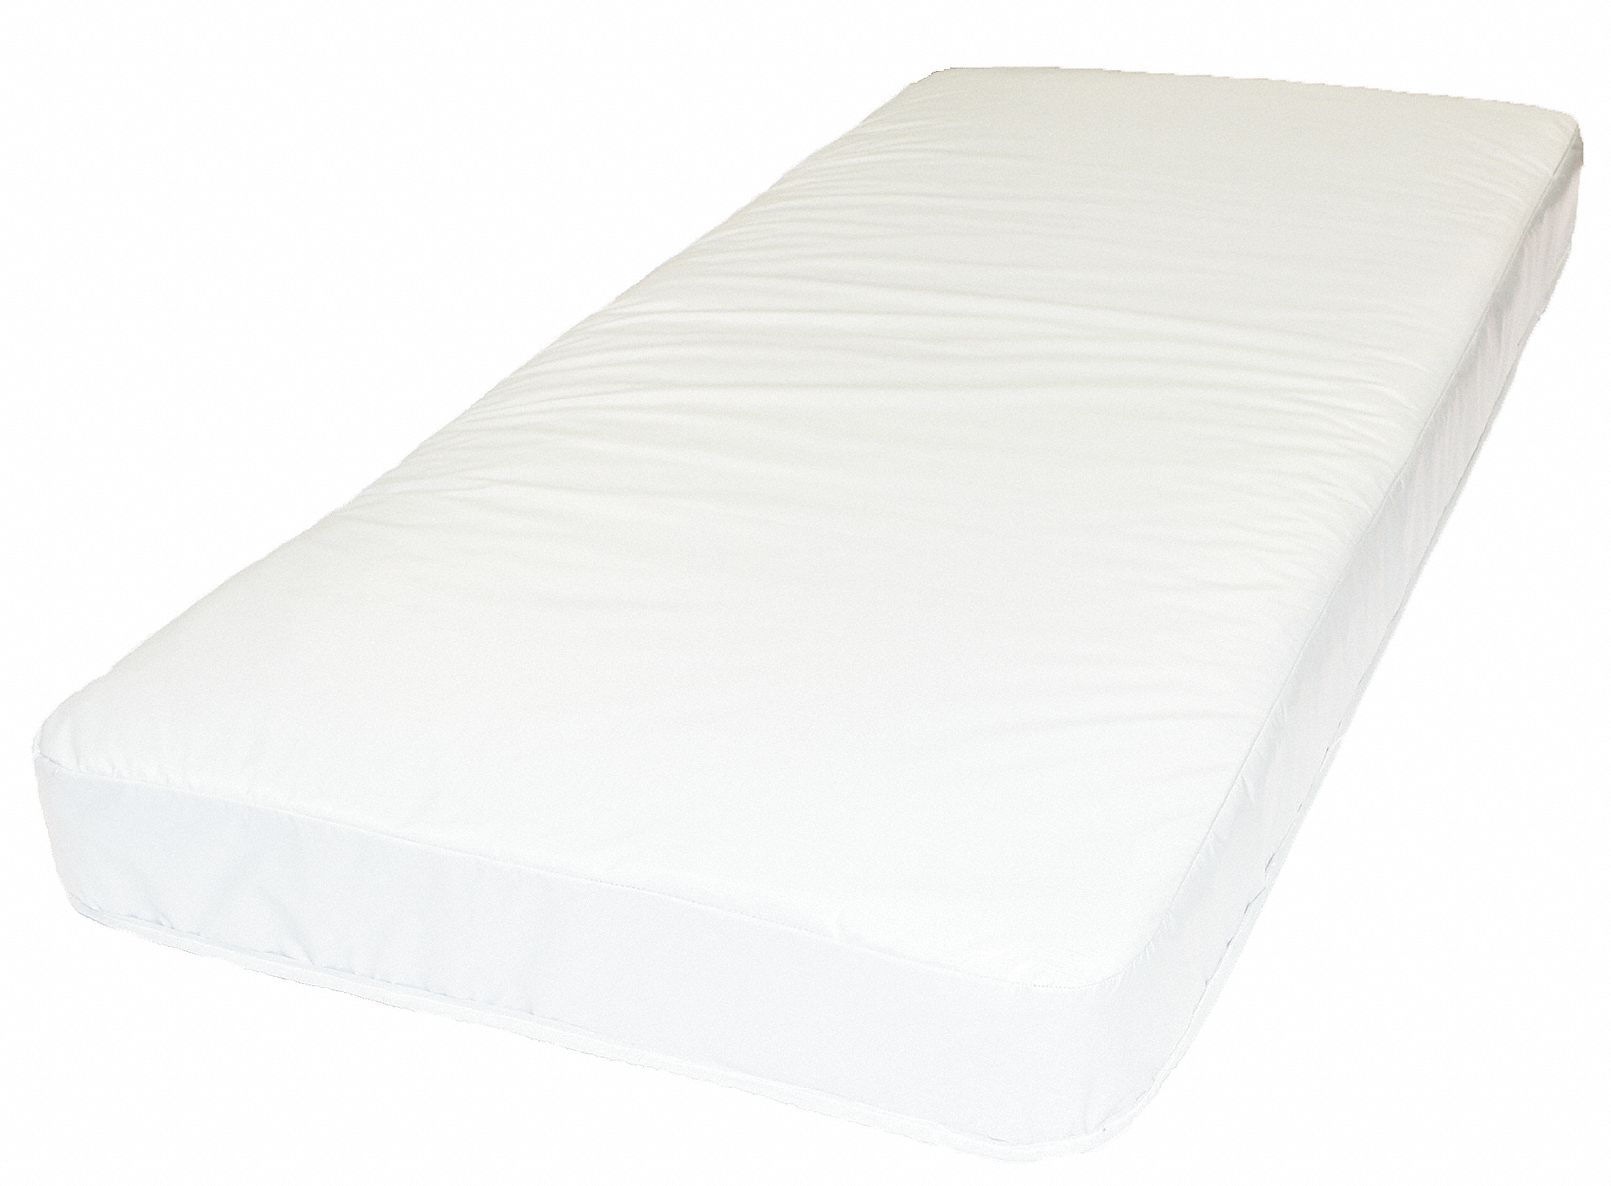 84 x 84 mattress protector